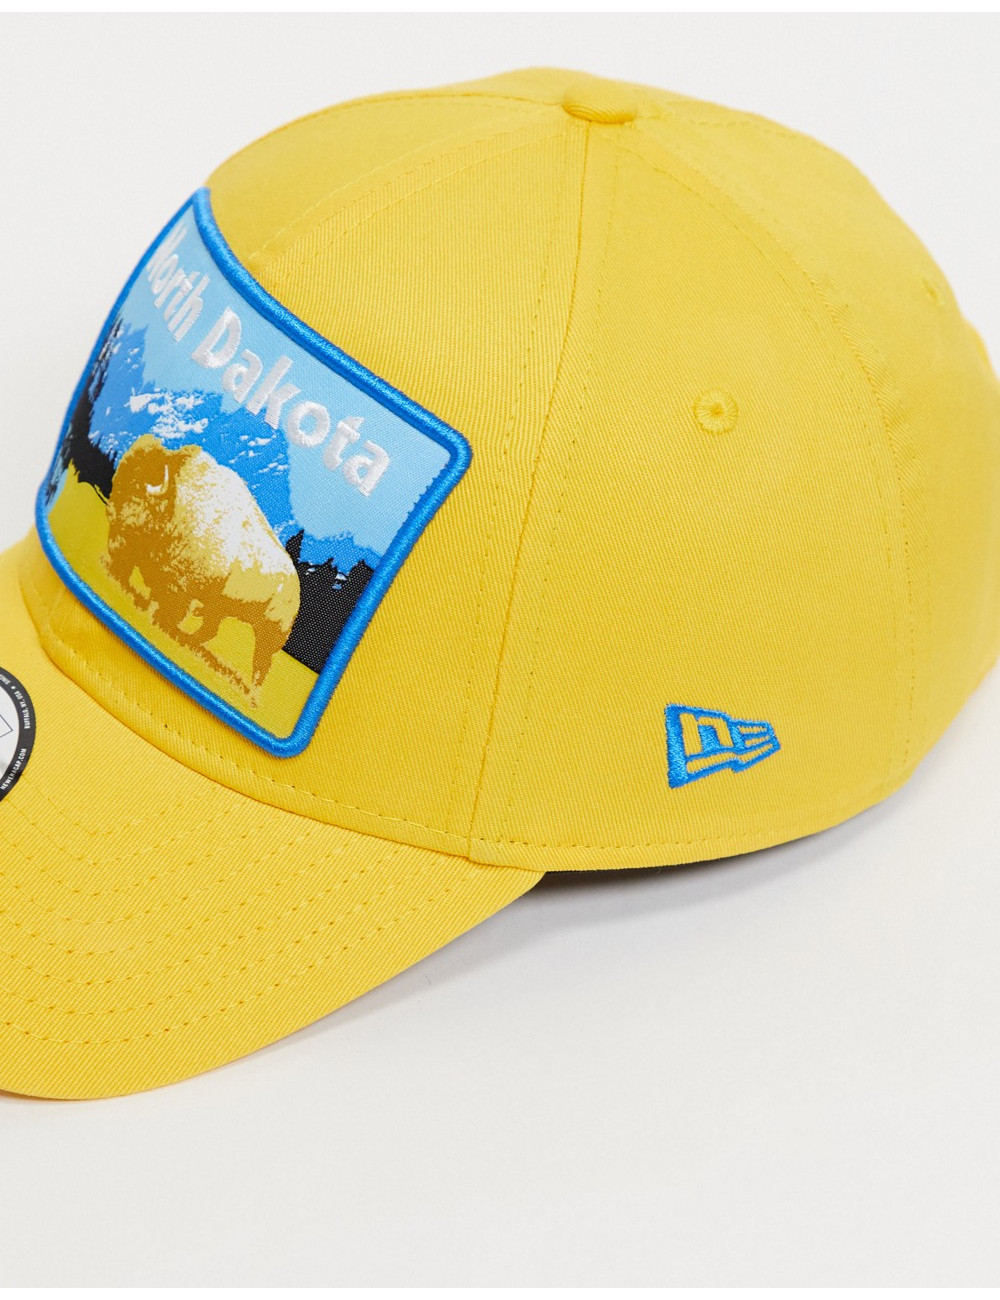 New Era 940 cap in yellow